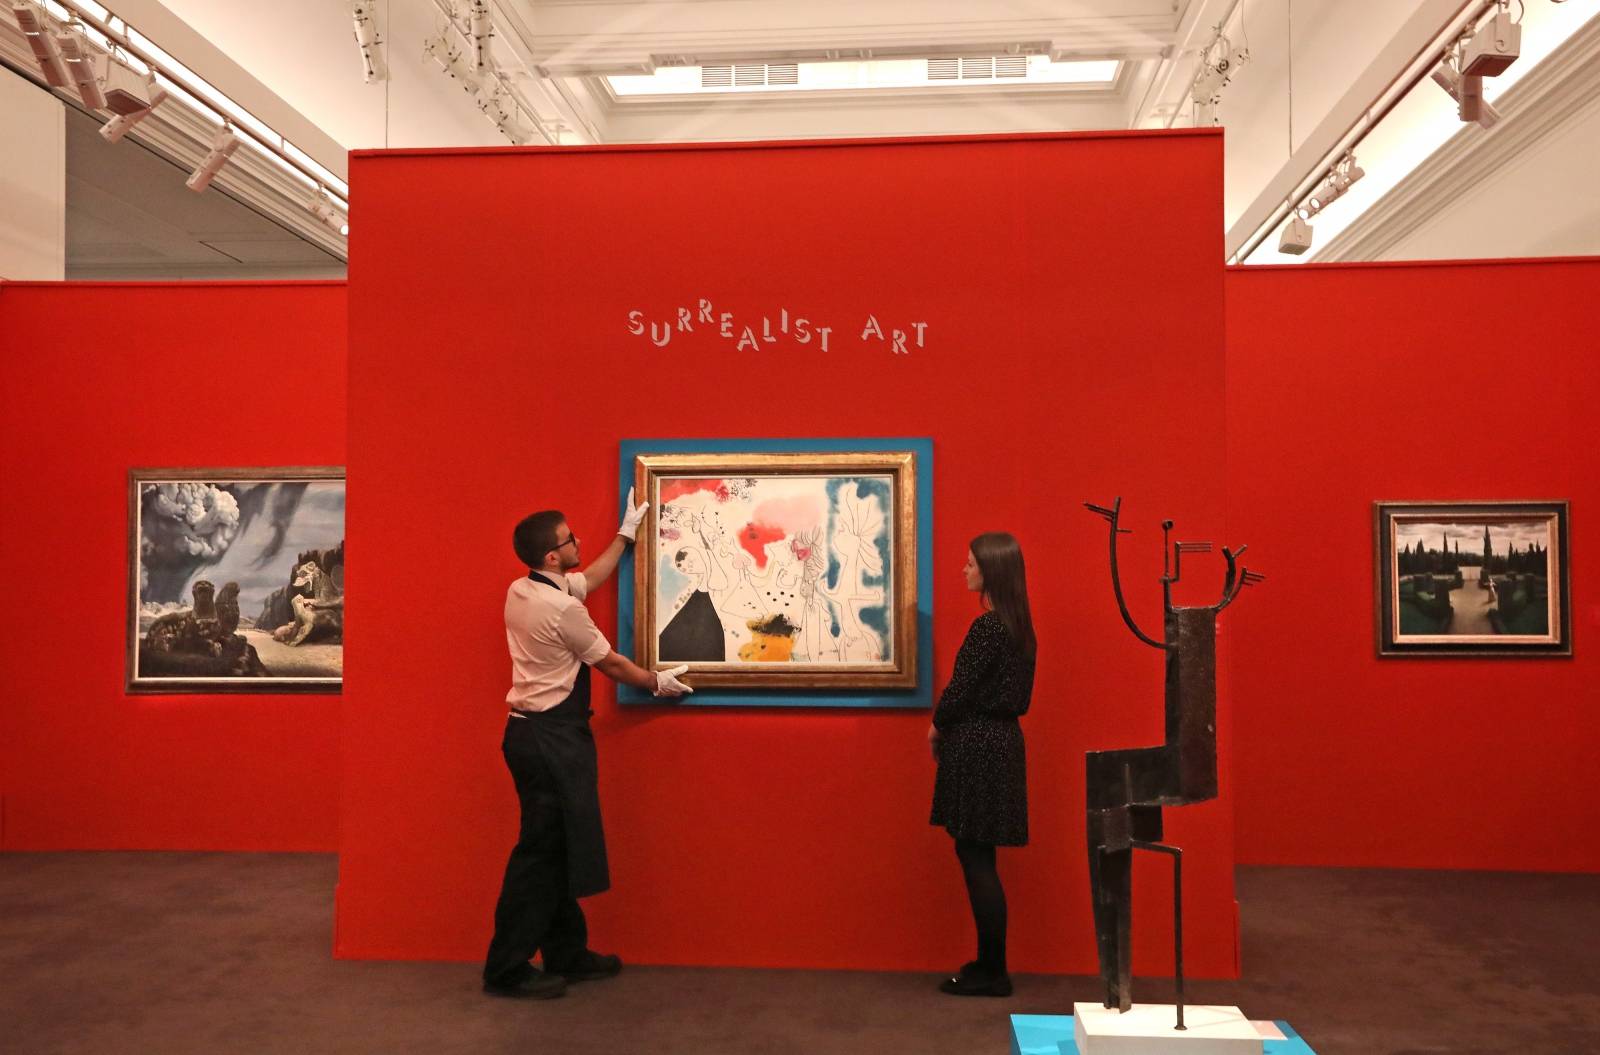 Sotheby's art sales